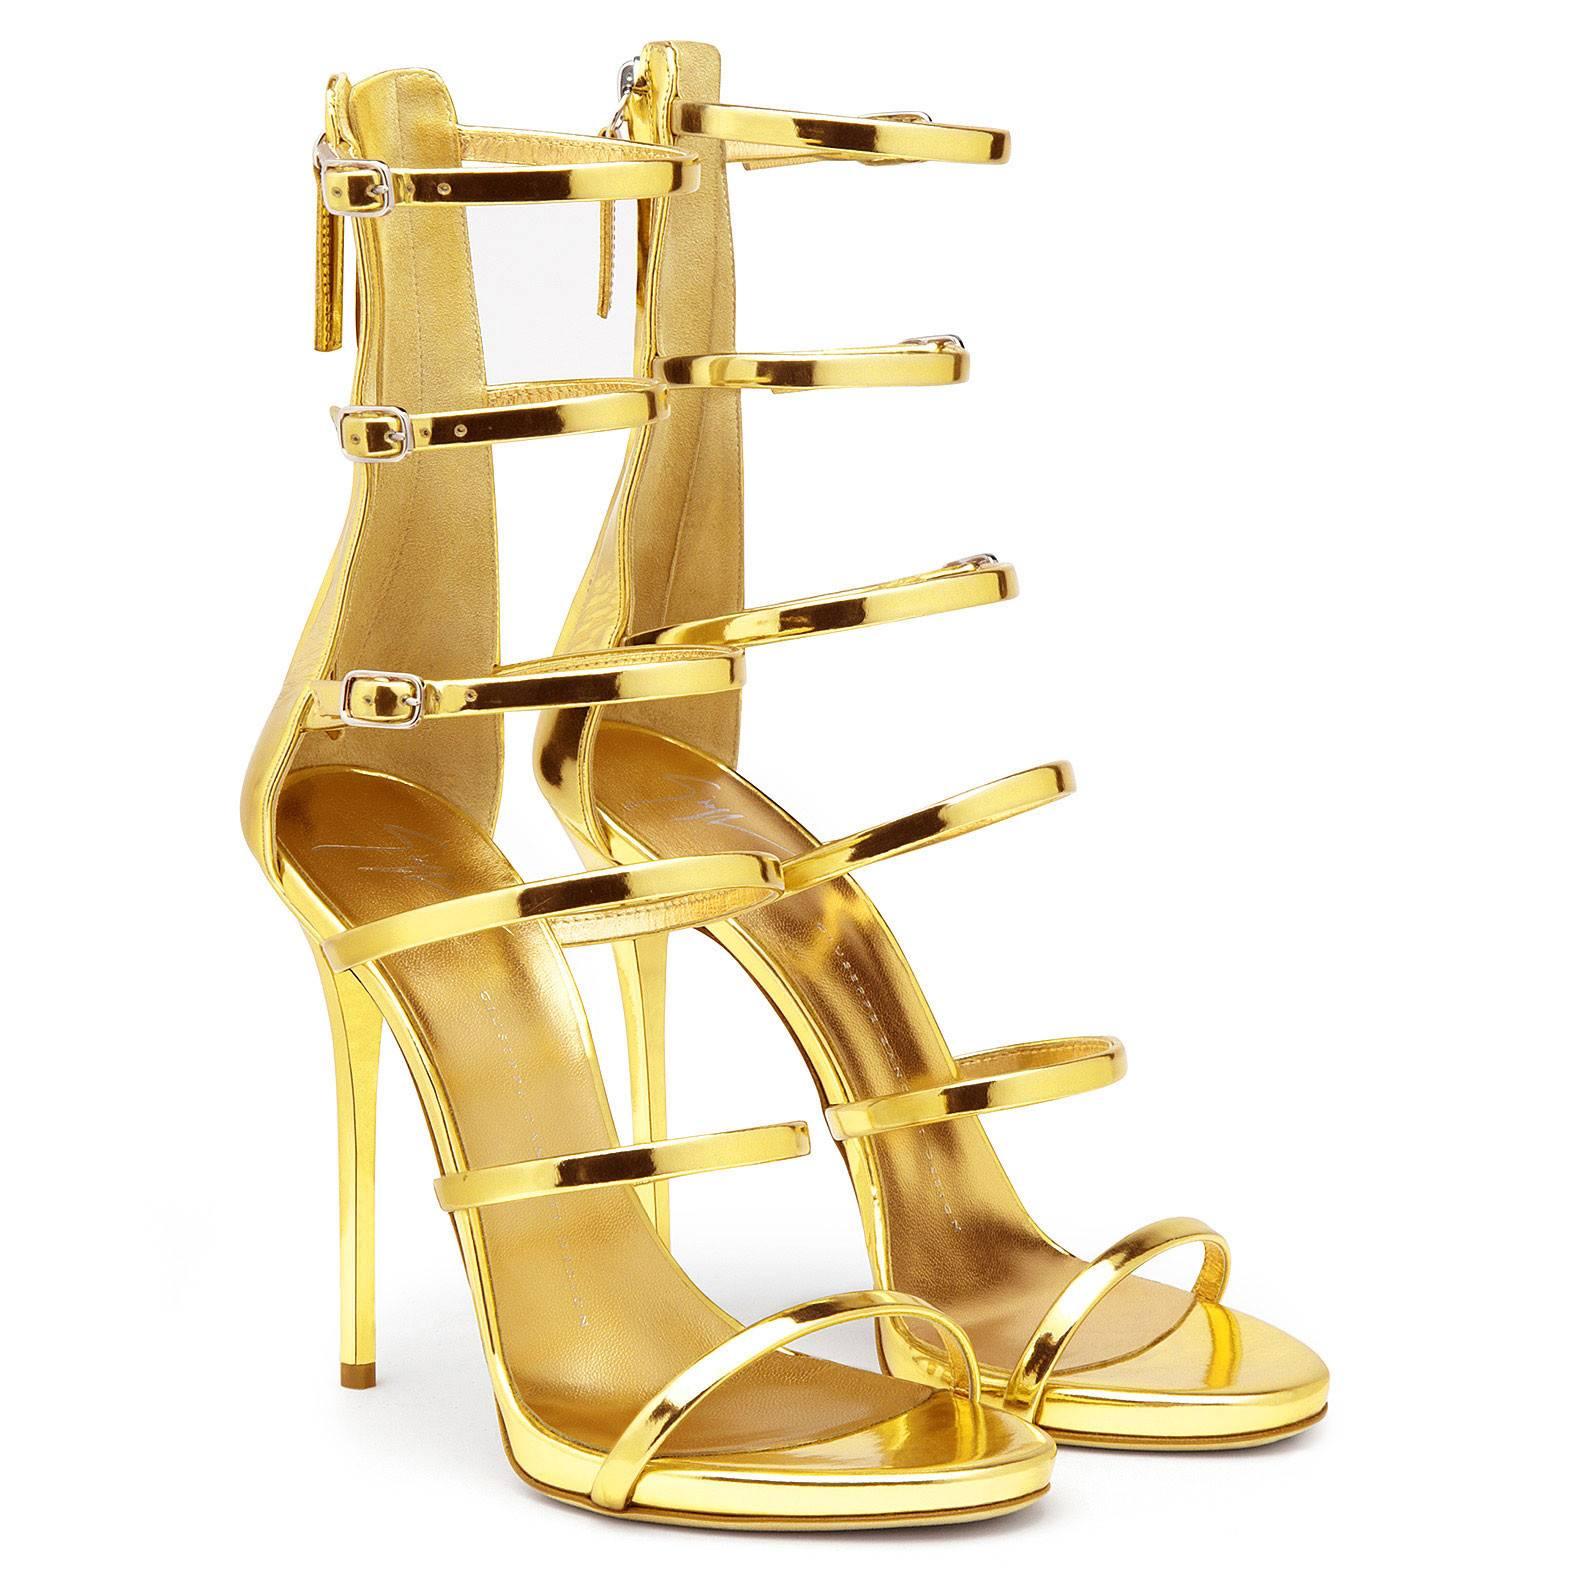 Women's Giuseppe Zanotti NEW Gold Patent Evening Low Gladiator Sandals Heels in Box